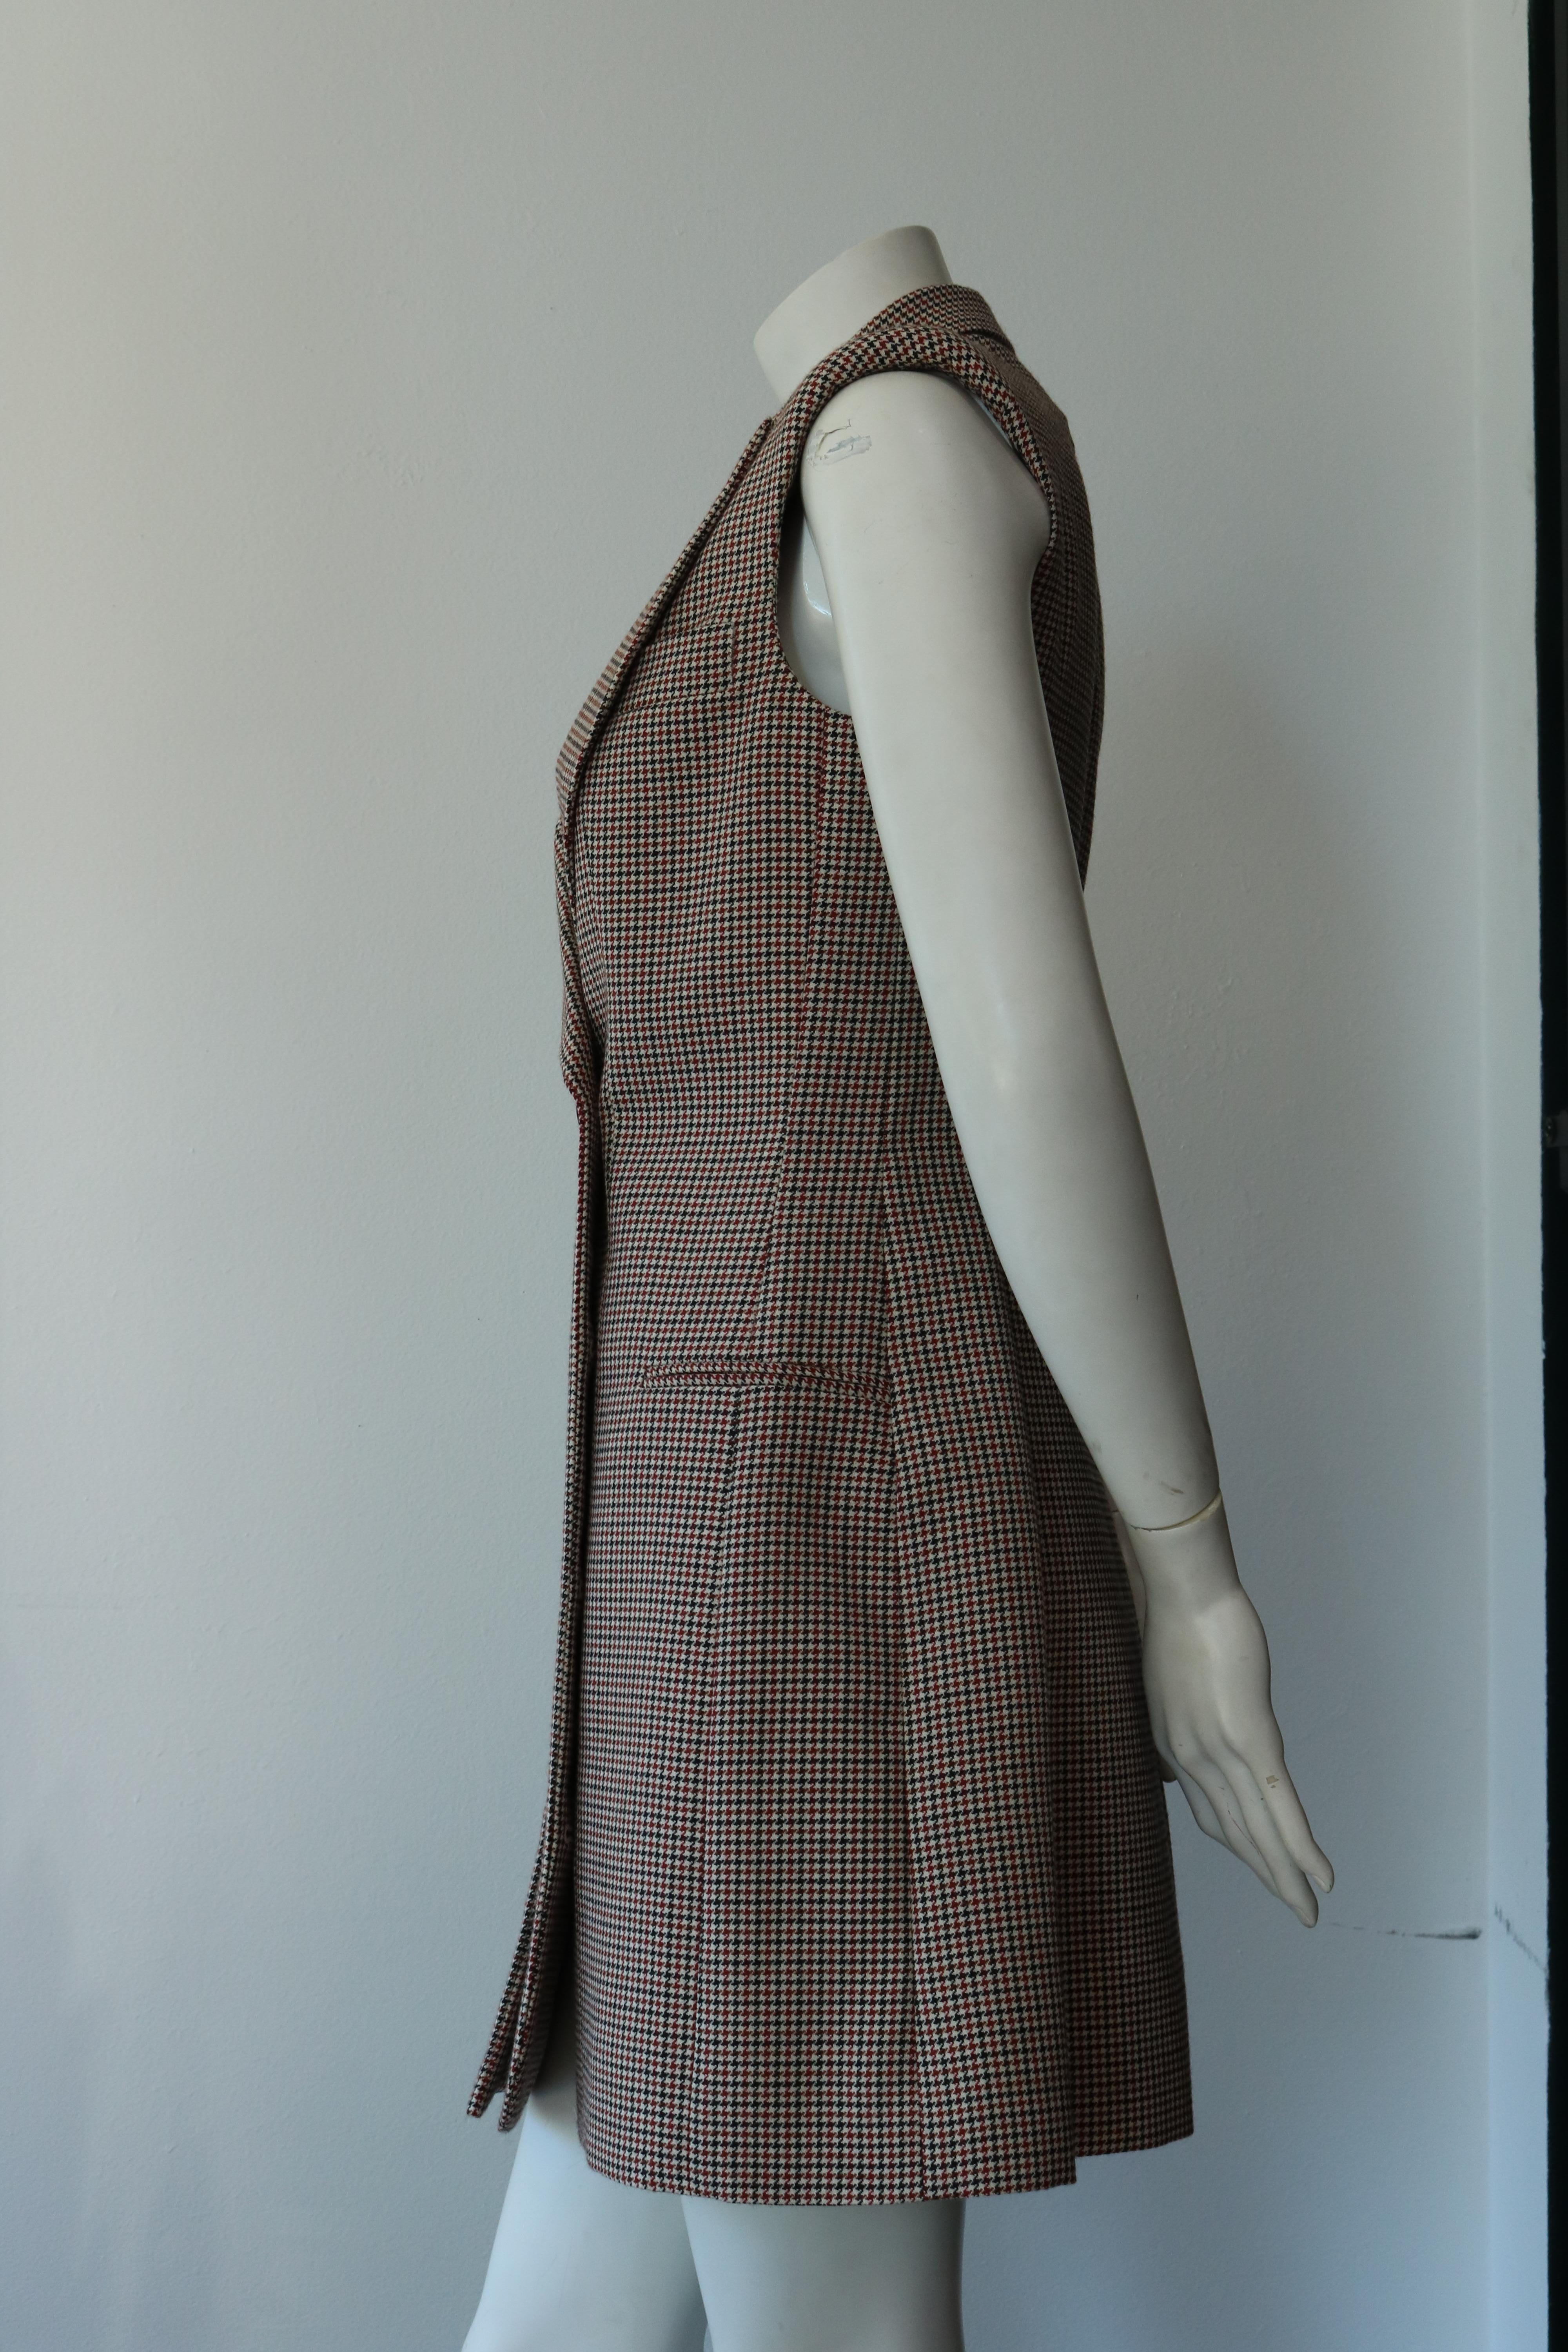 Stella McCartney Tweed Suit Dress  3